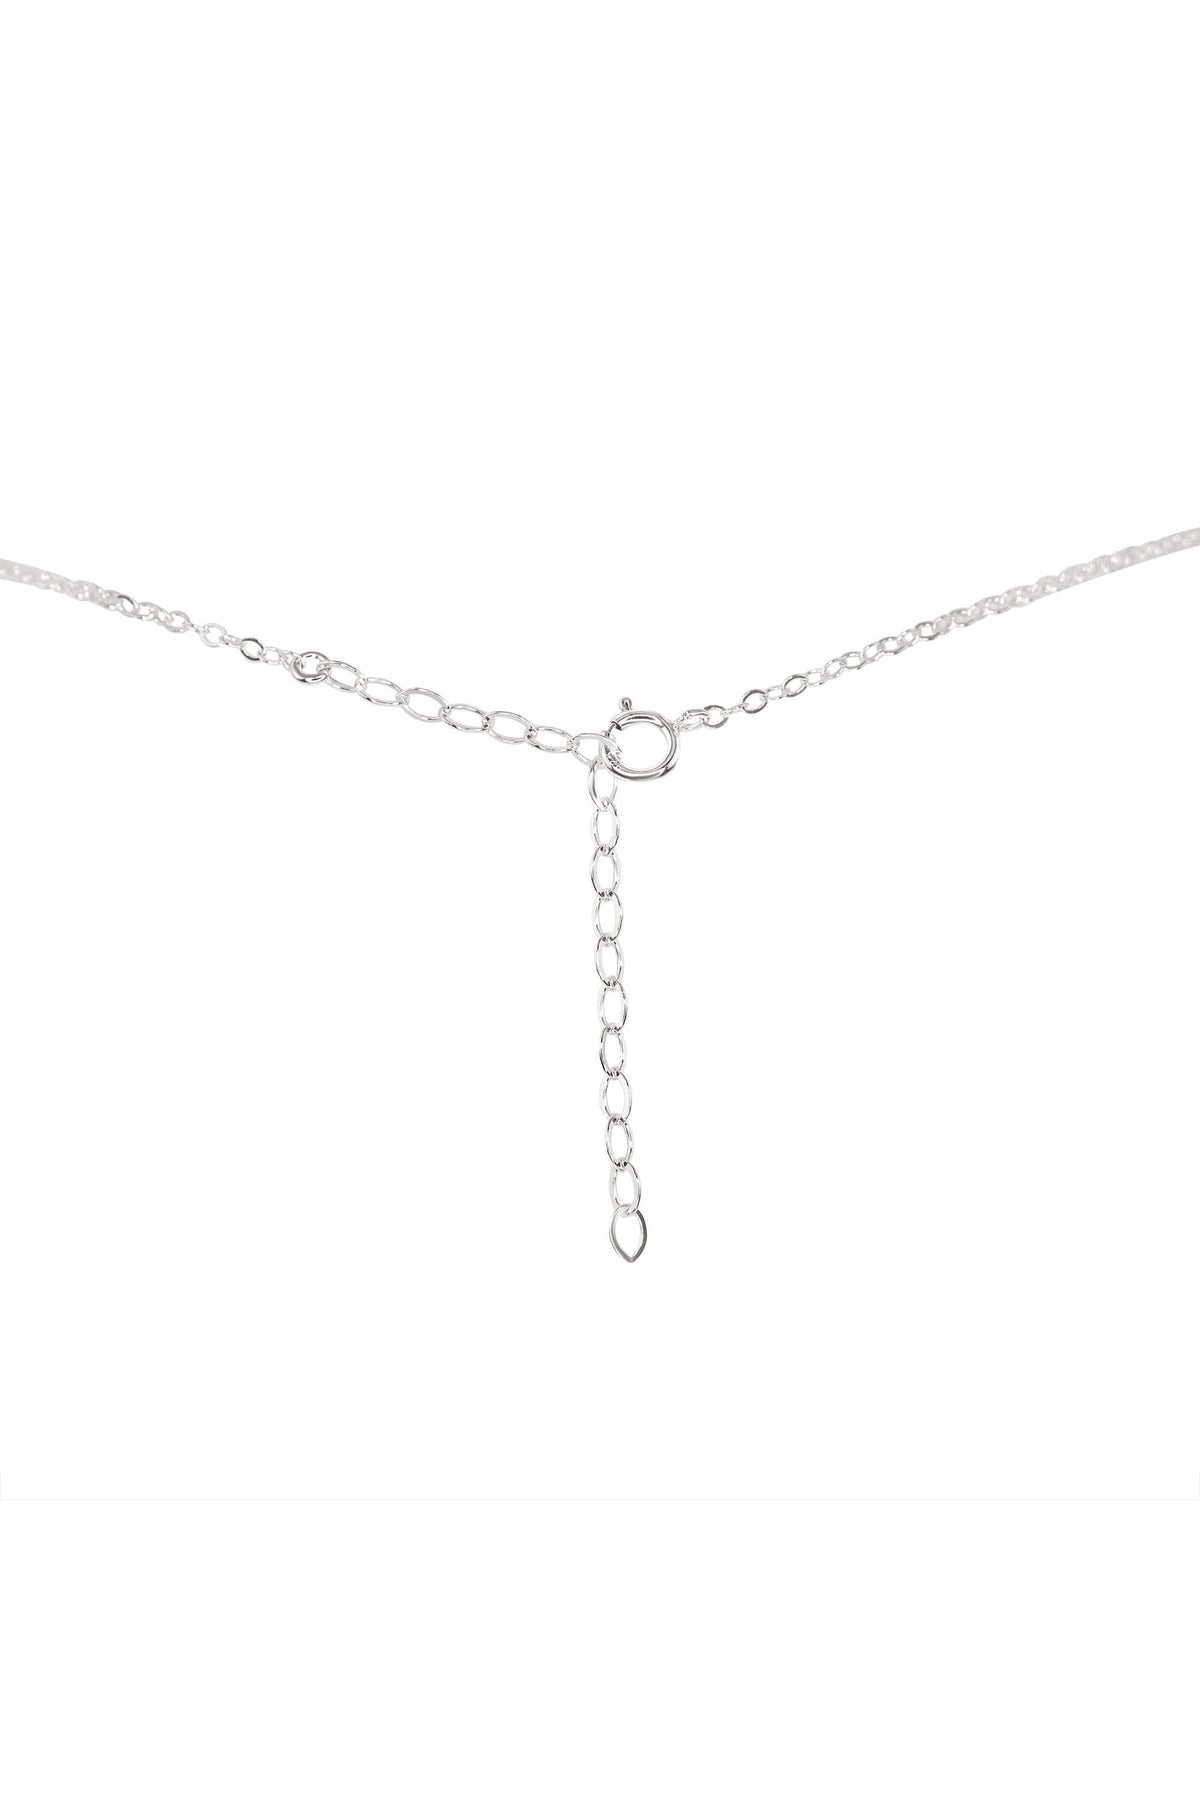 Raw Crystal Pendant Choker - Citrine - Sterling Silver - Luna Tide Handmade Jewellery